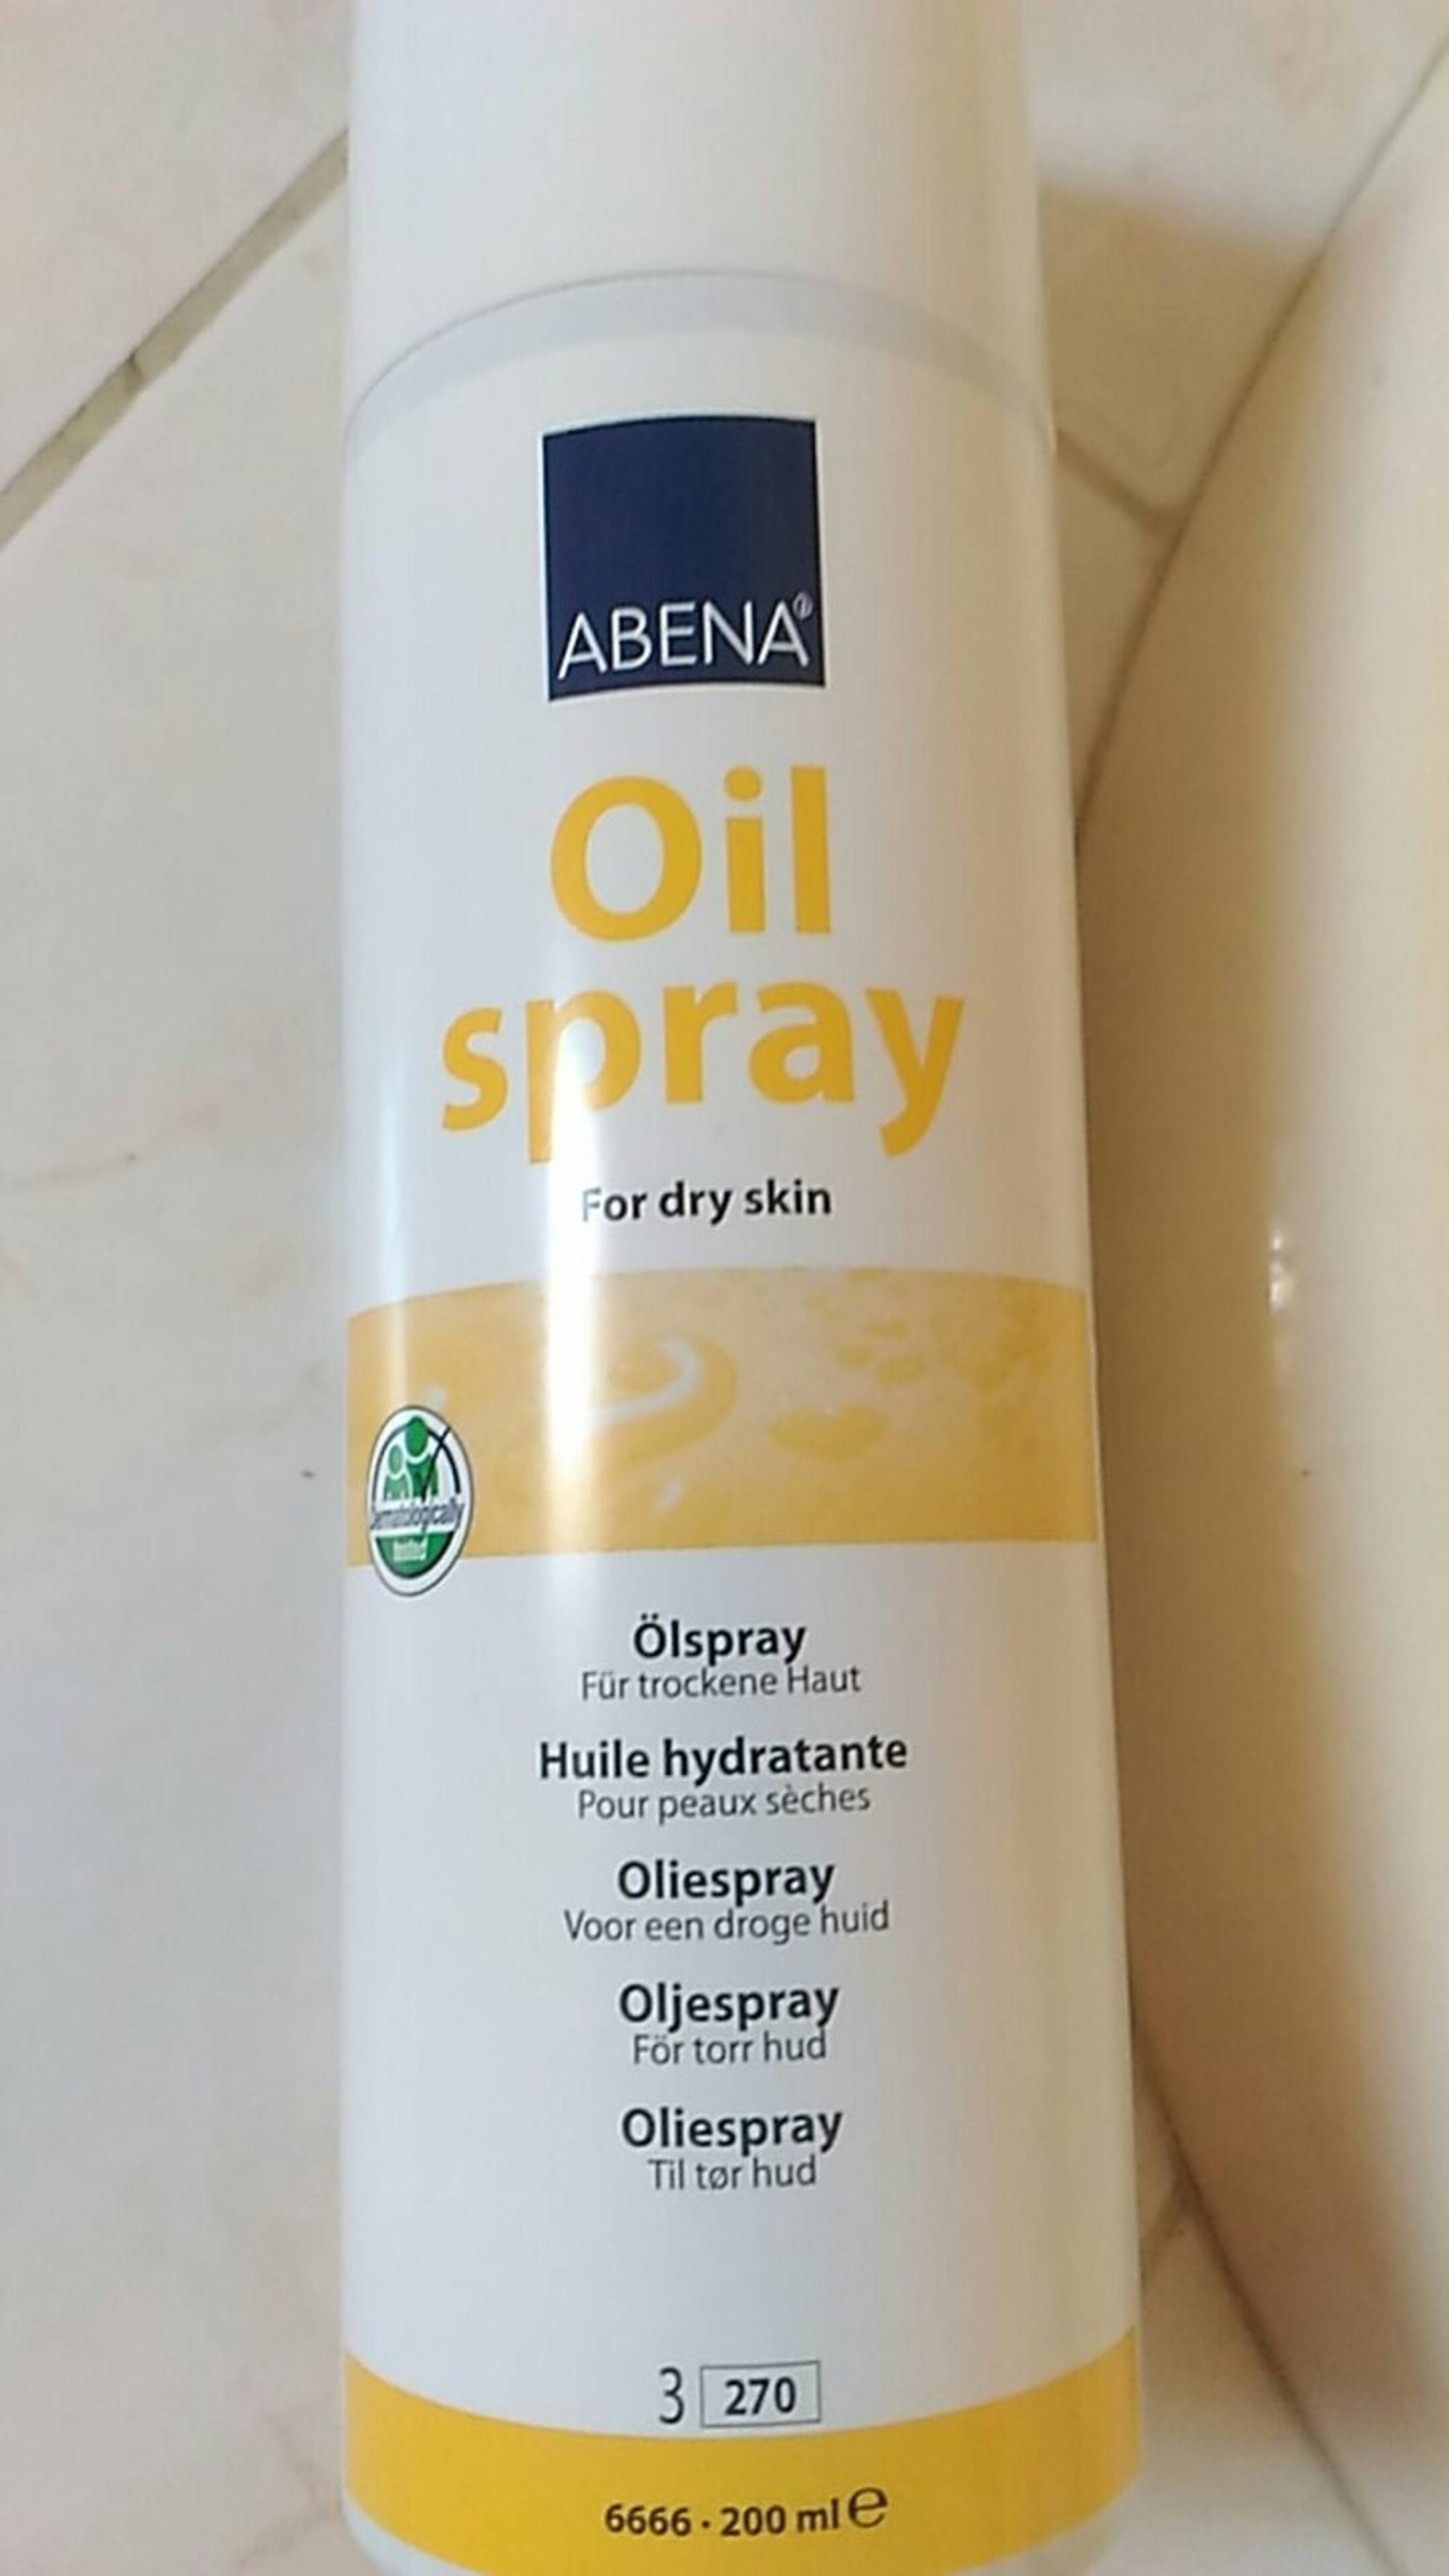 ABENA - Oil spray - Huile hydratante